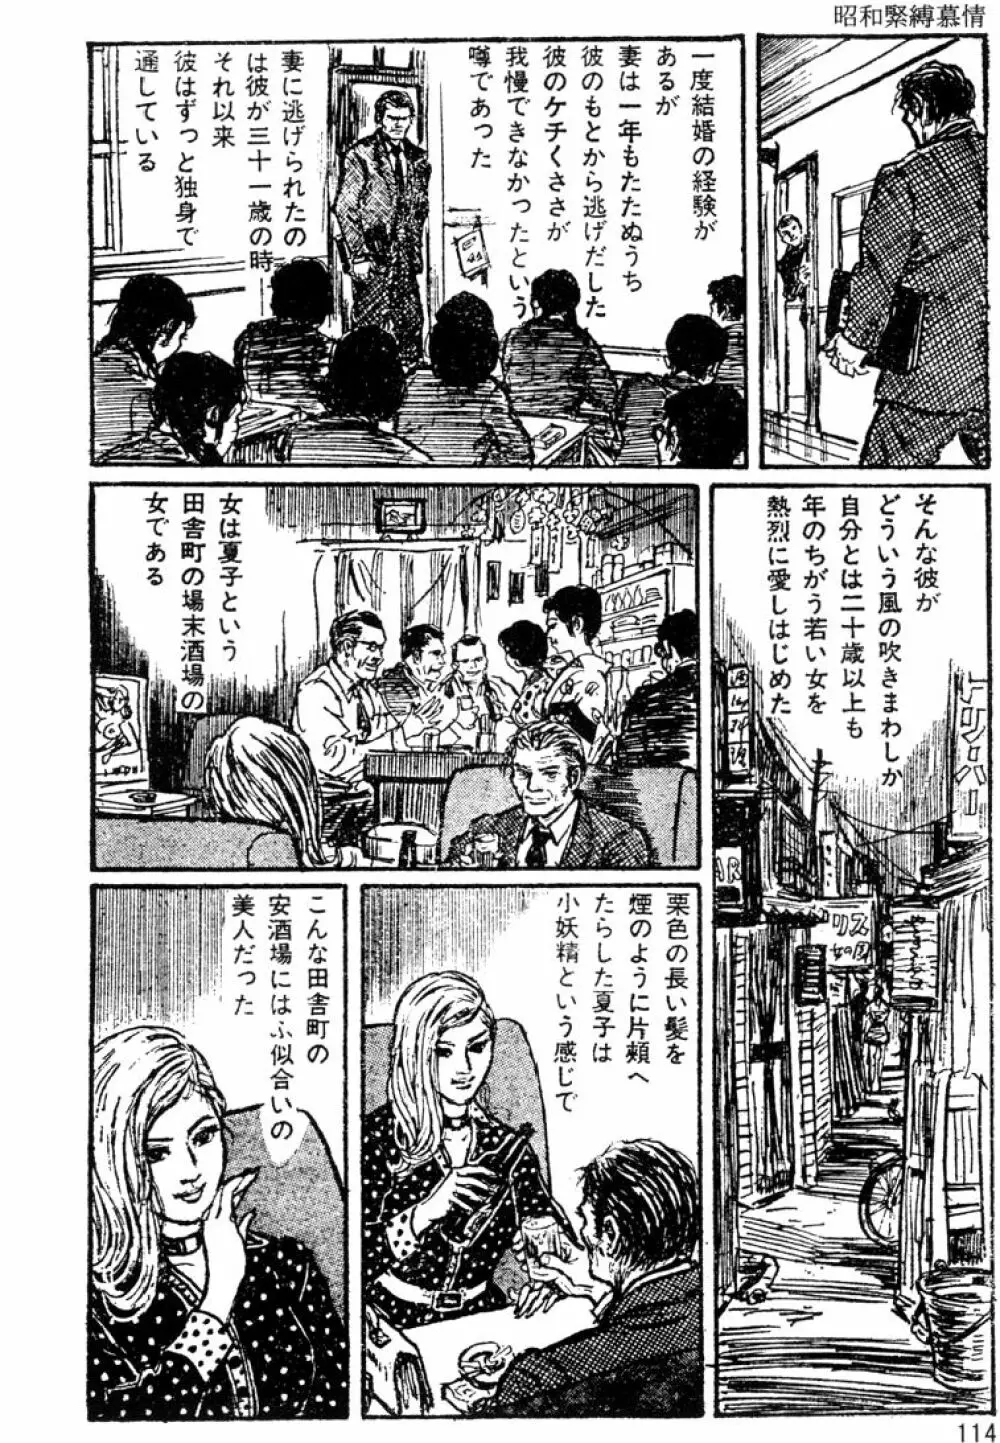 団鬼六原作劇画集成 84ページ